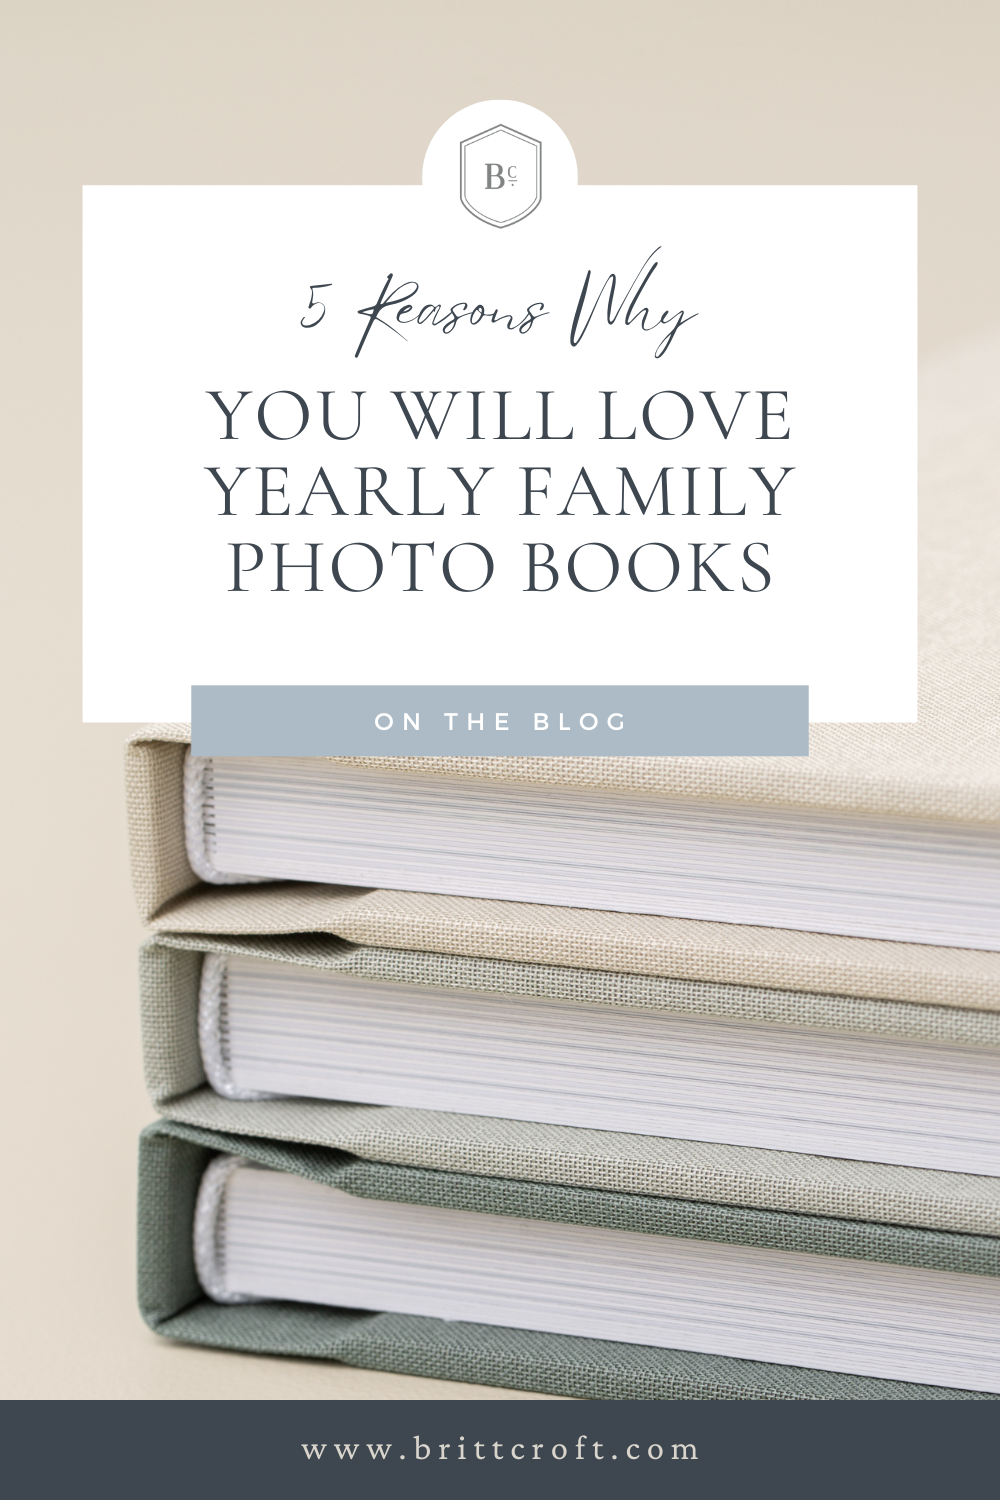 Creating Yearly Family Photo Books